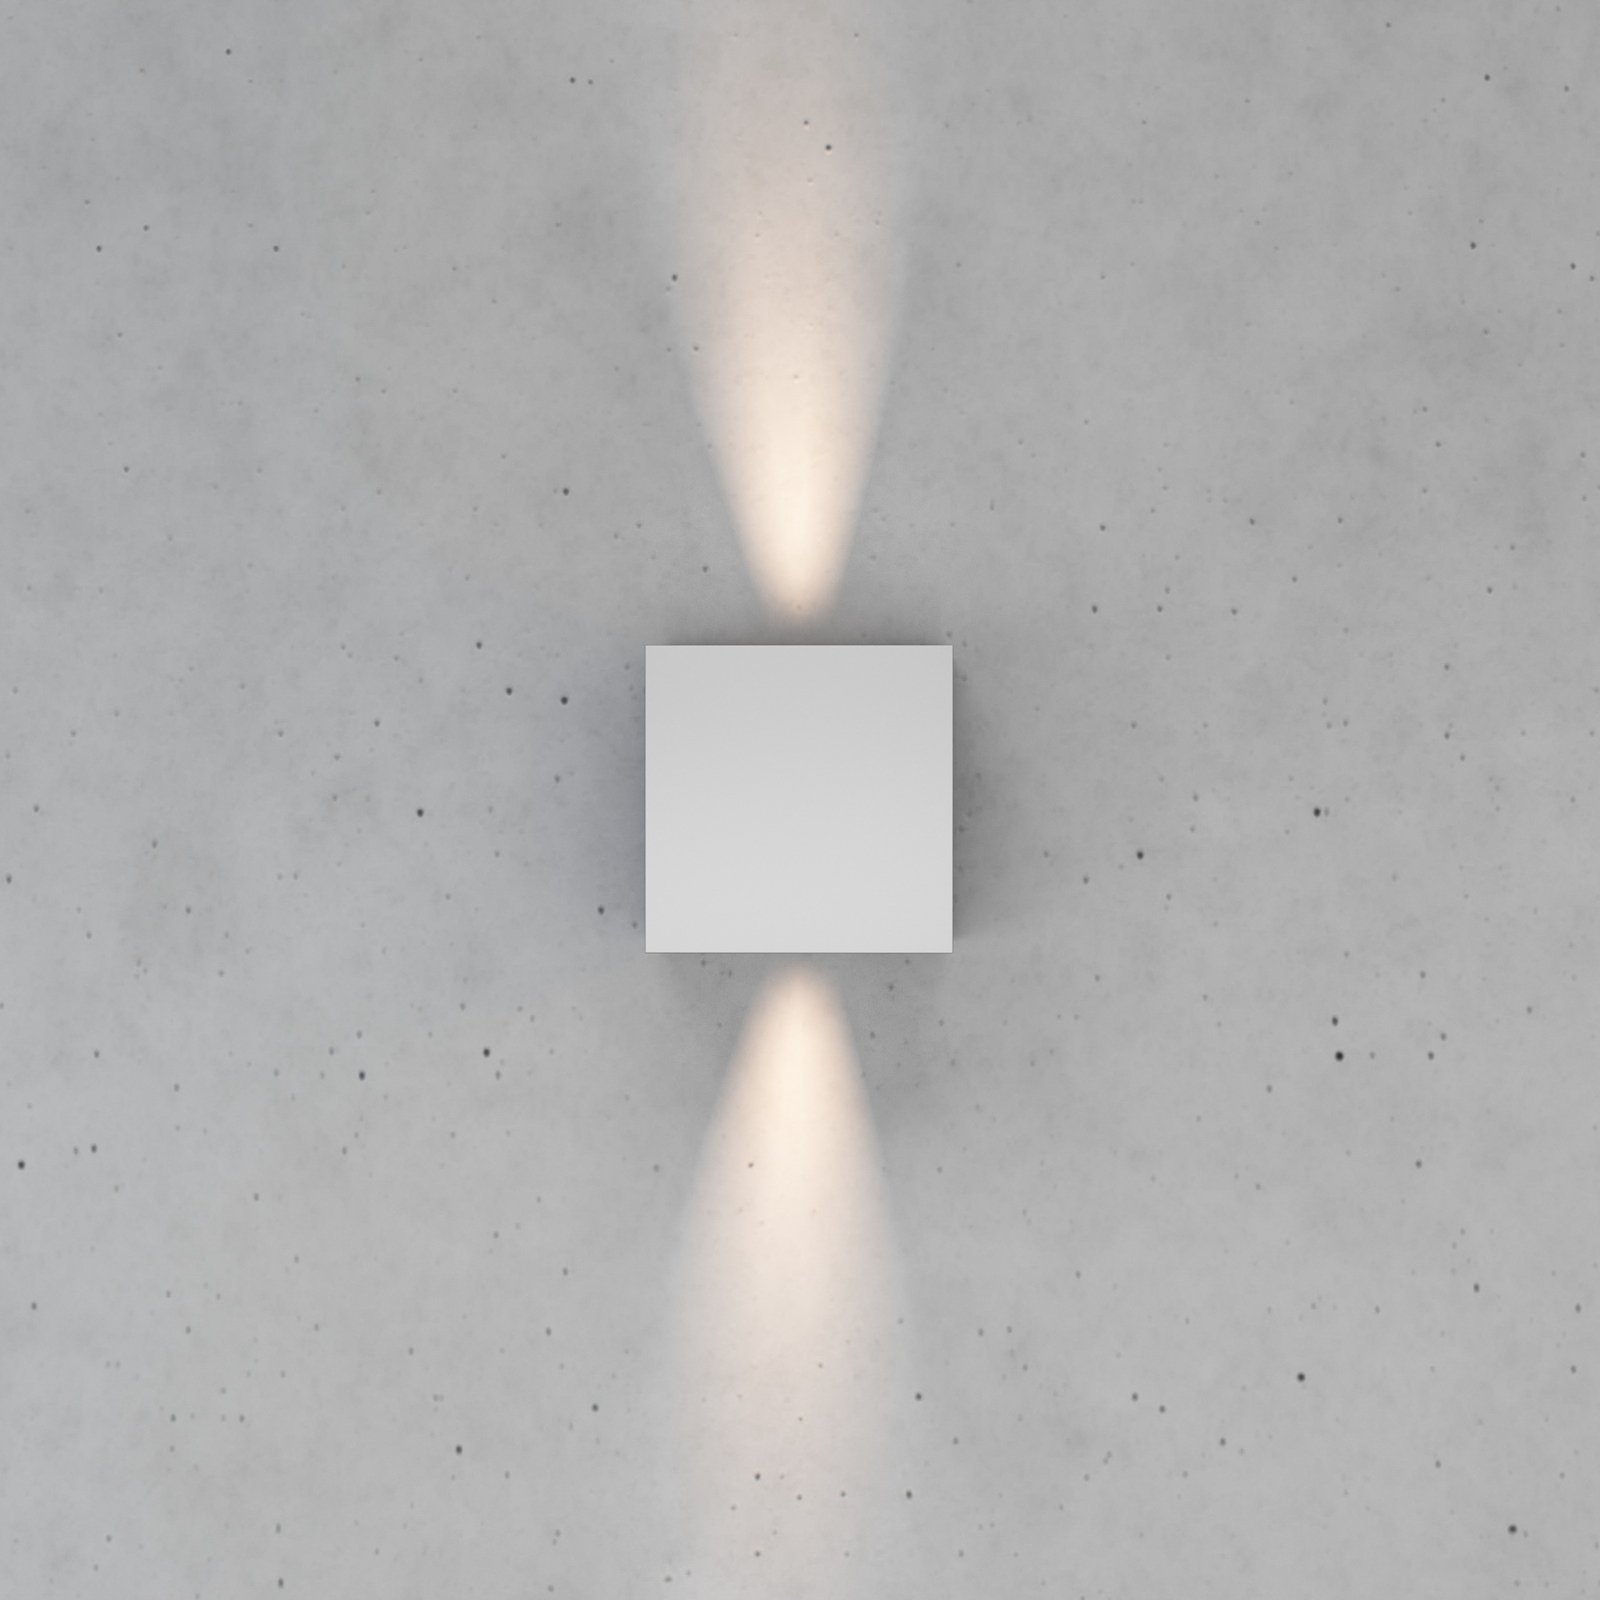 Lampa ścienna Zuza 2, kolor aluminium, metal, cztery skrzydła, 10 cm, G9